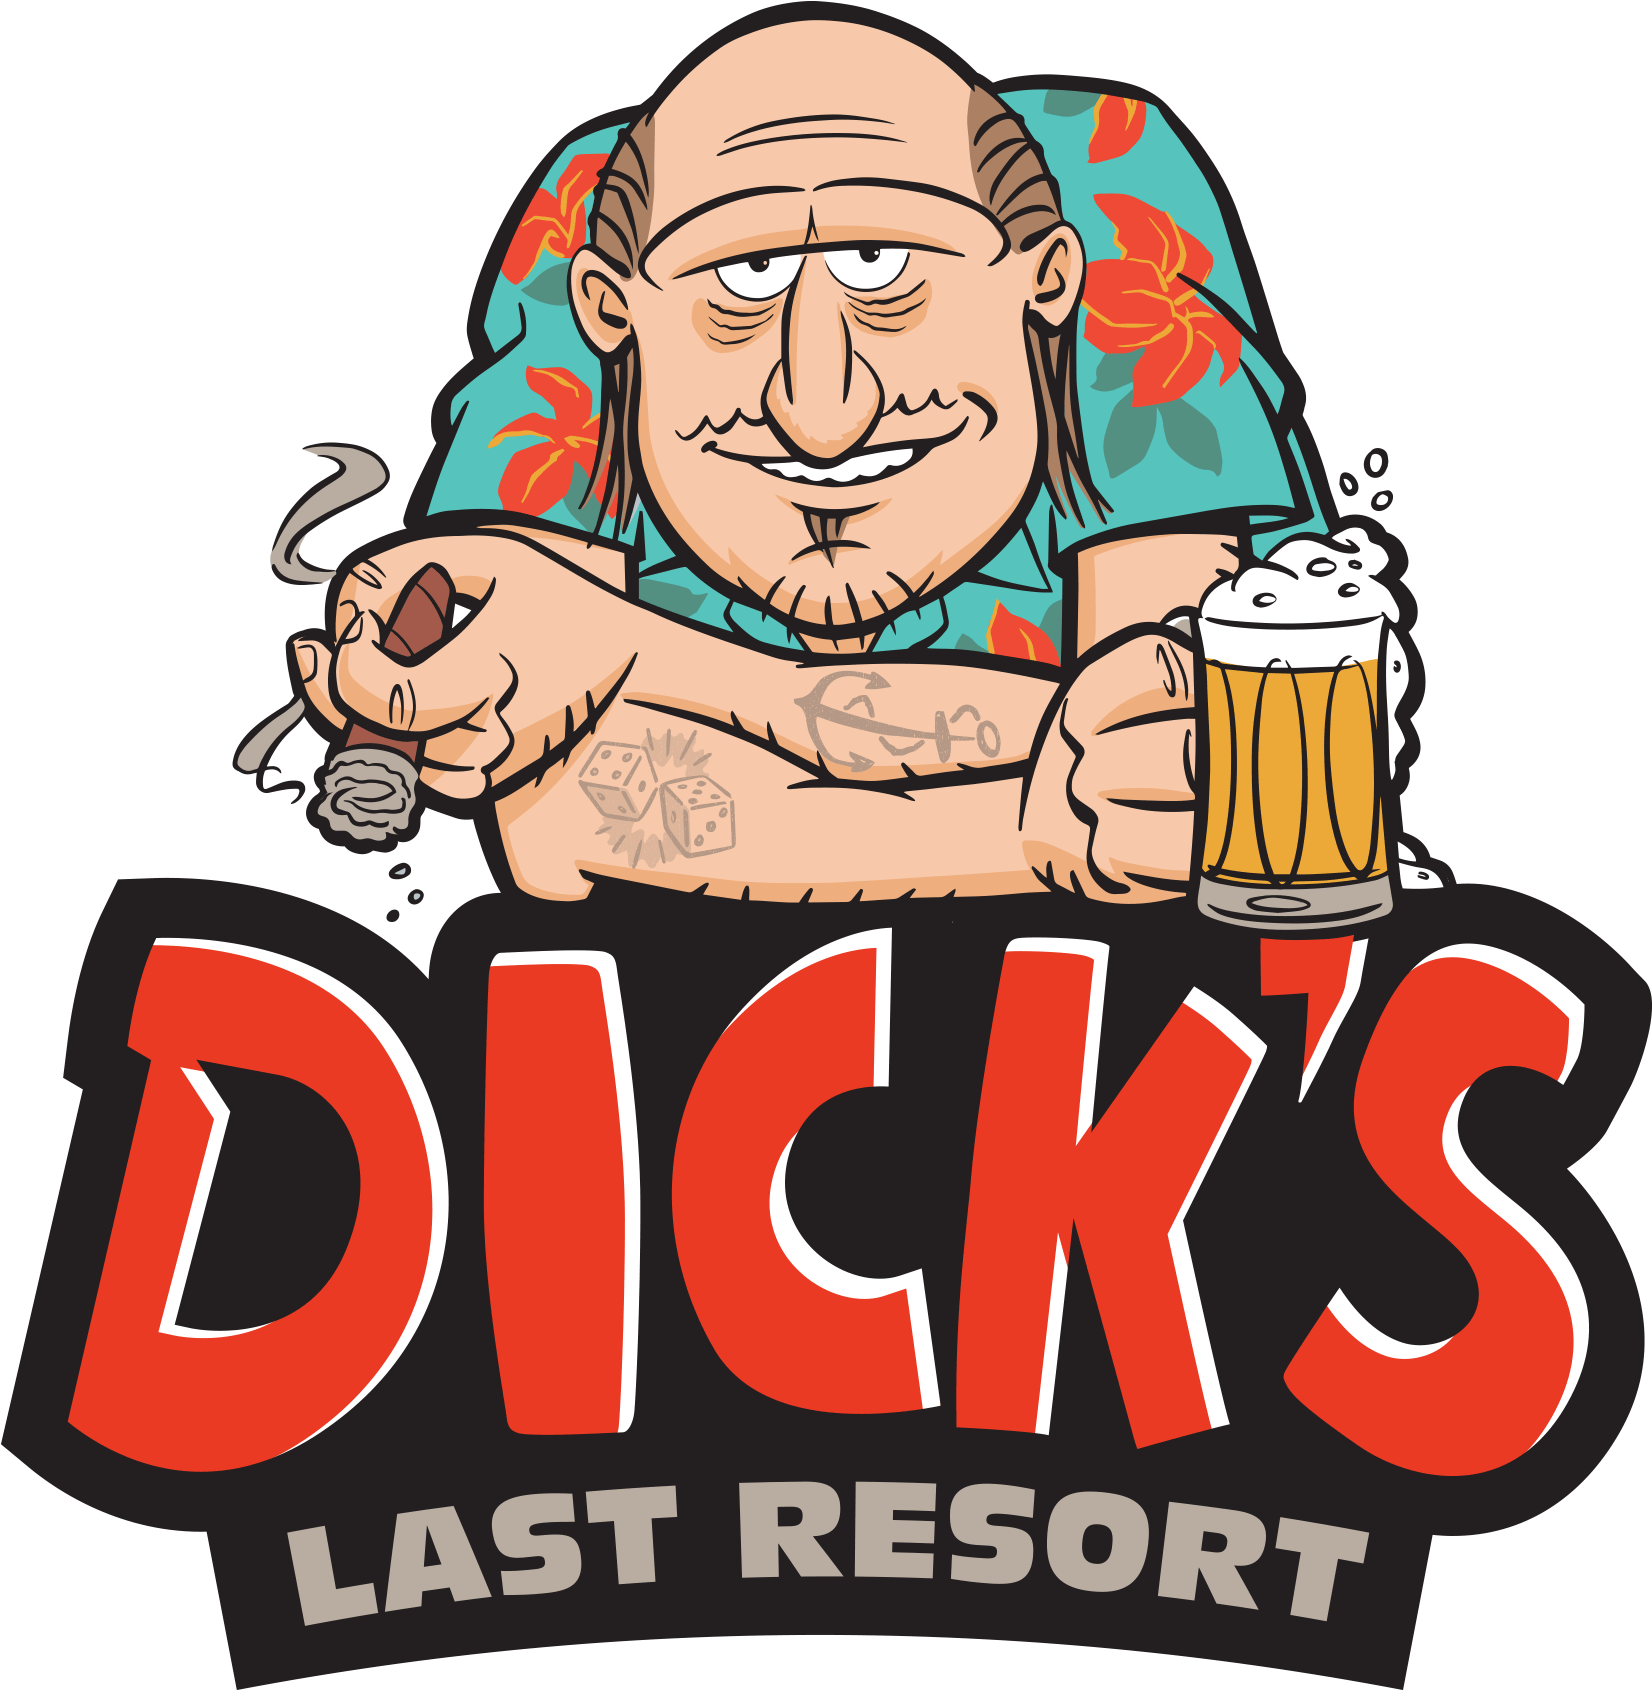 Dick's last resort picture